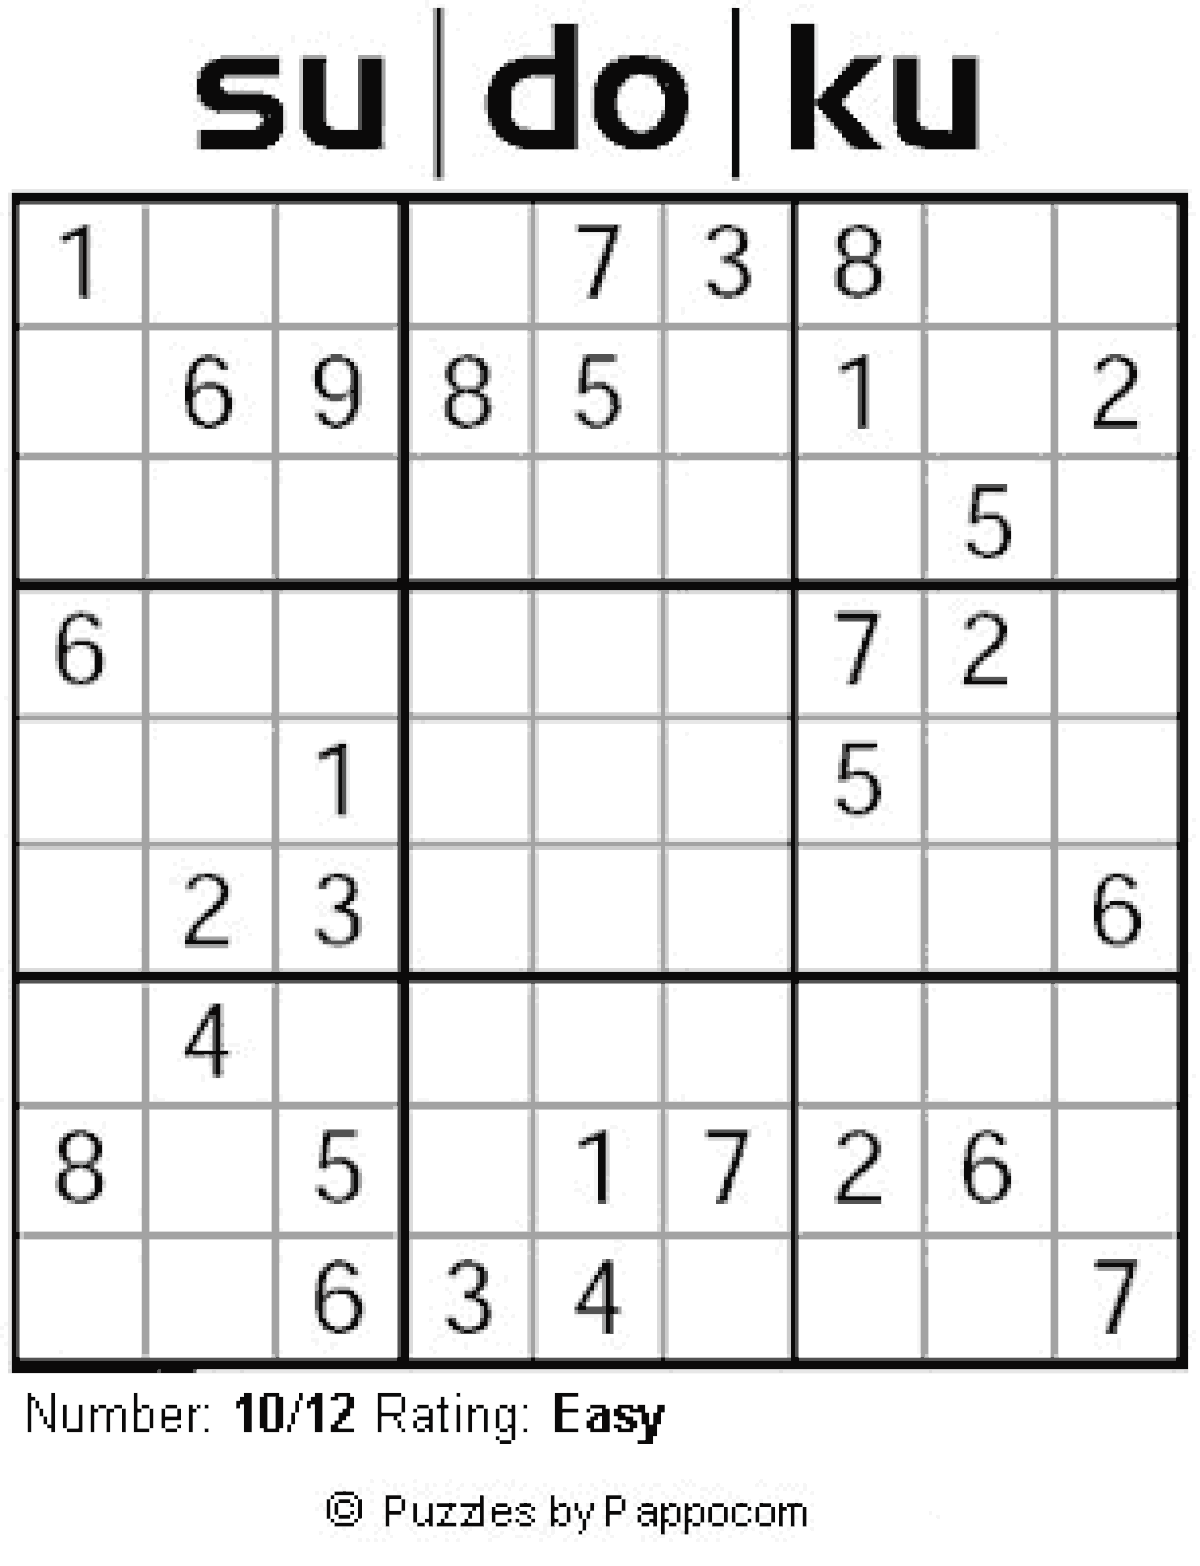 Help solving a sudoku puzzle